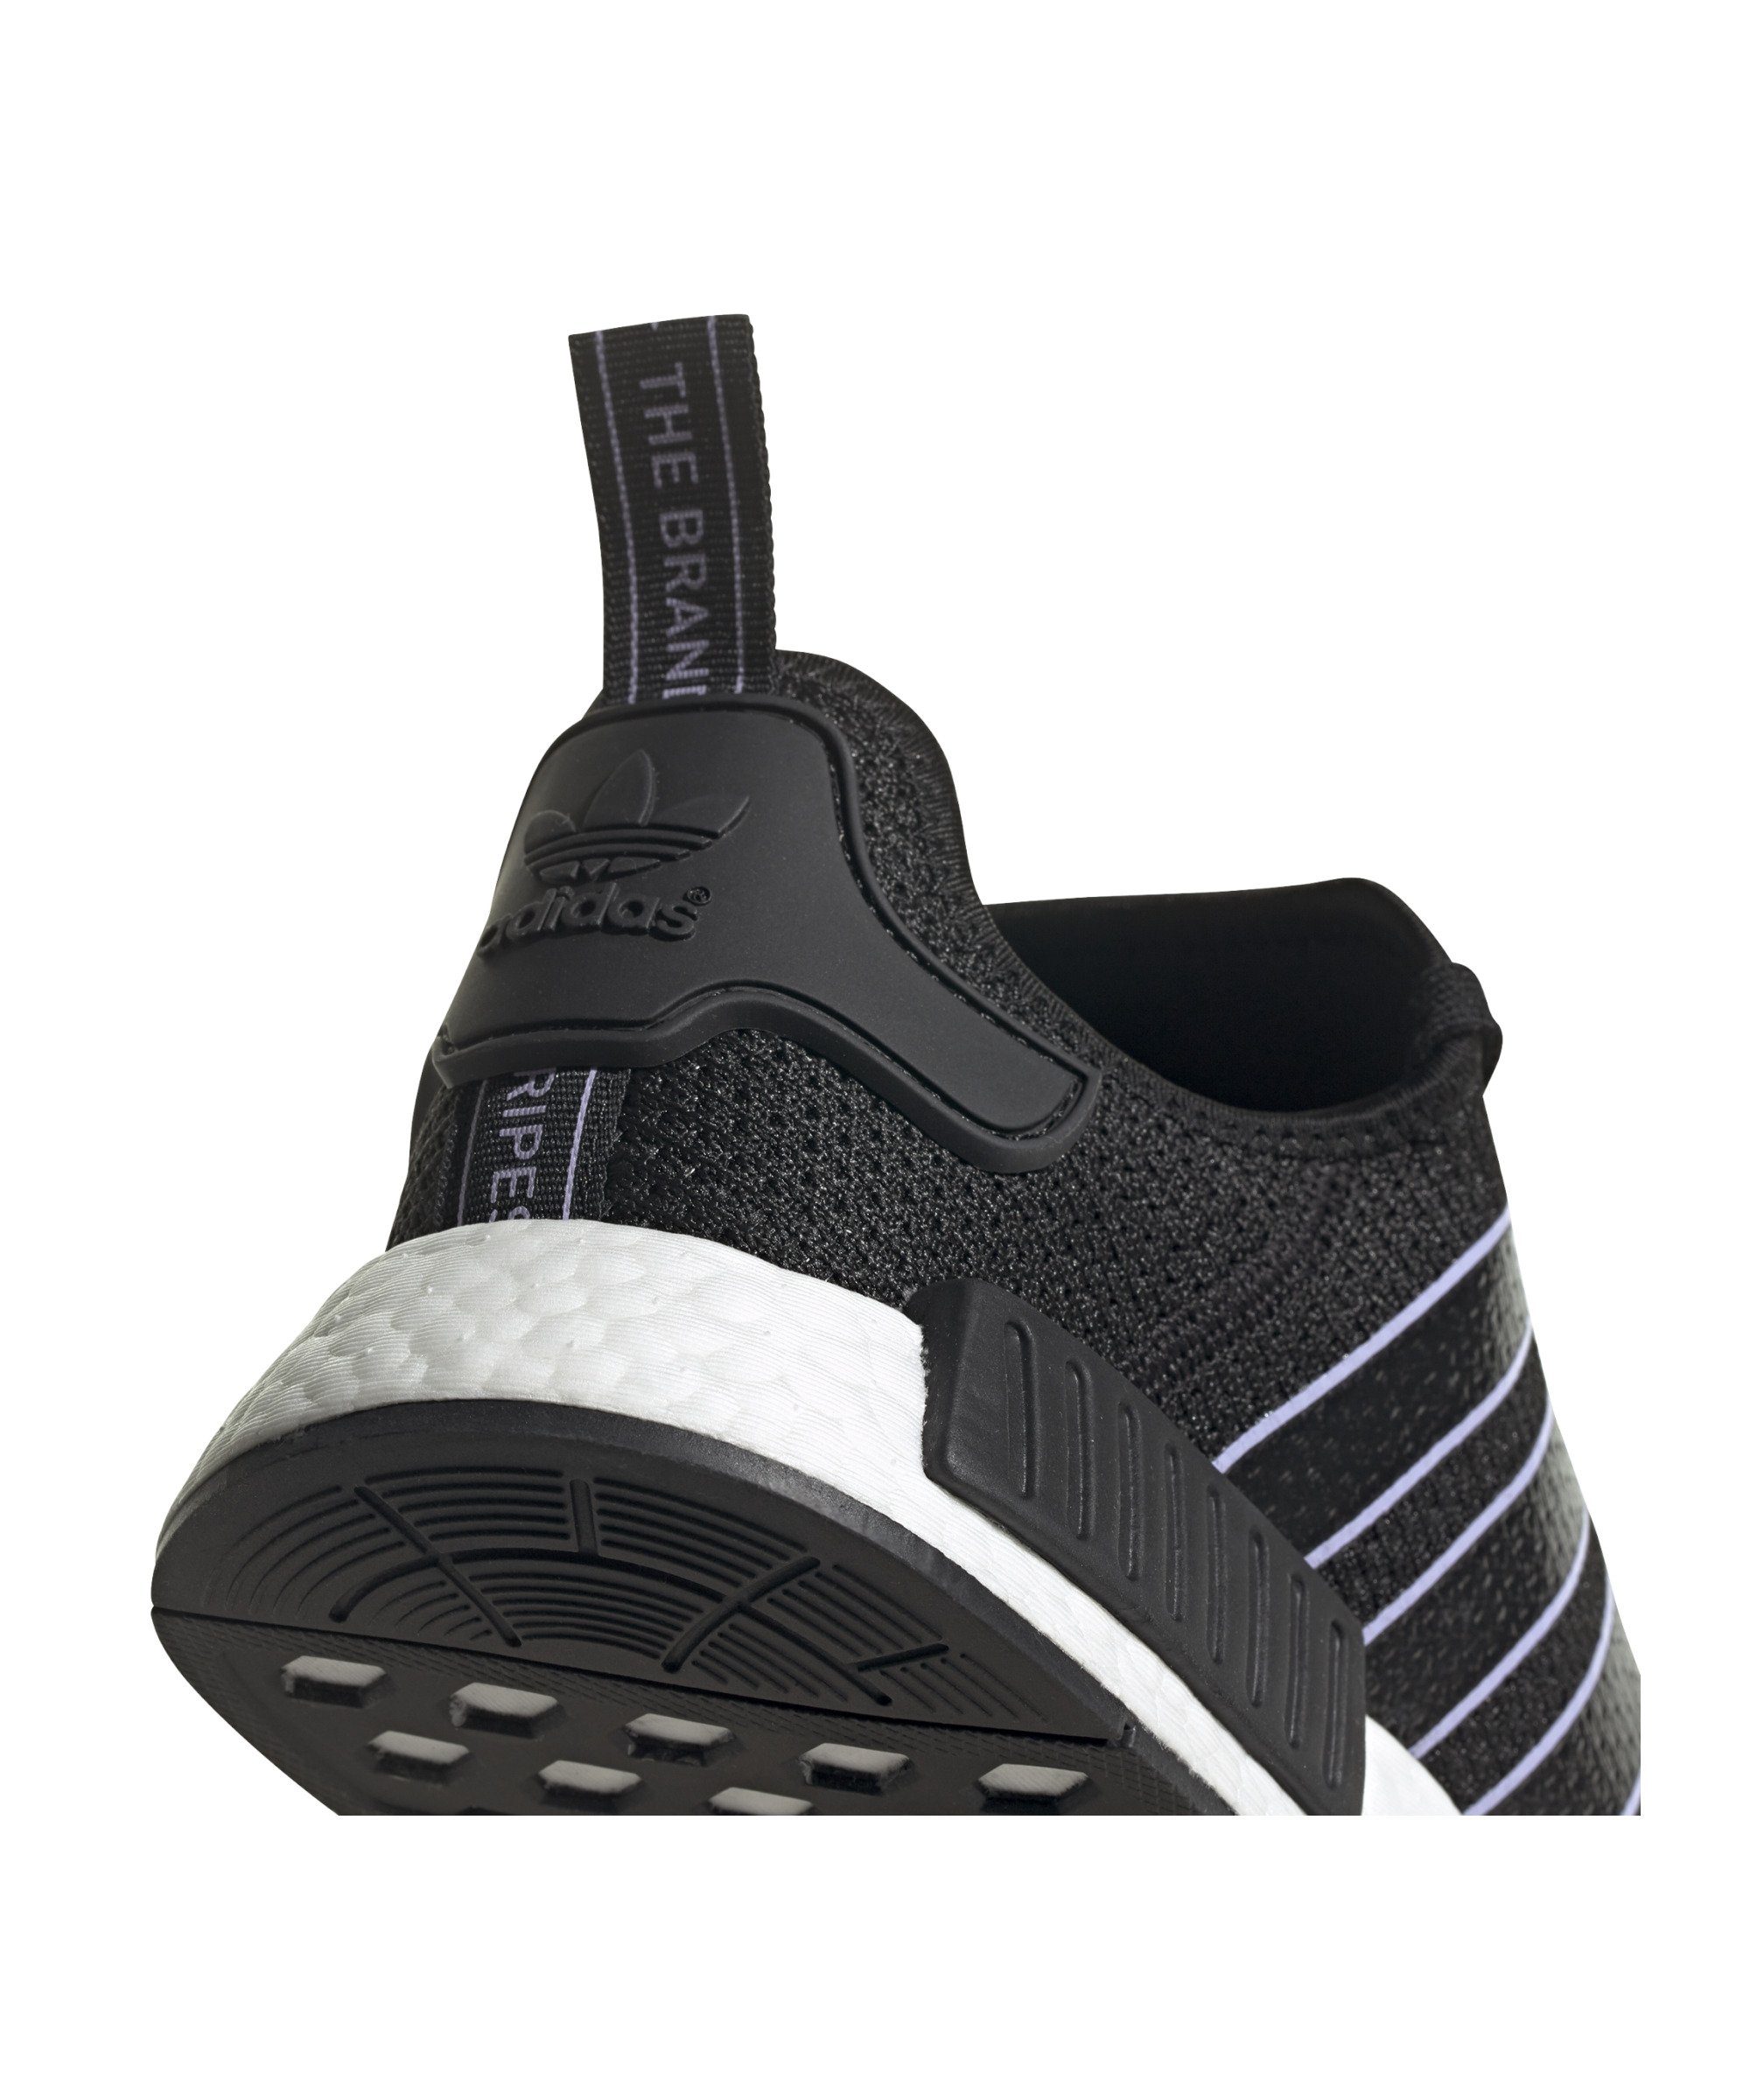 Originals adidas NMD_R1 Sneaker schwarzlilaweiss